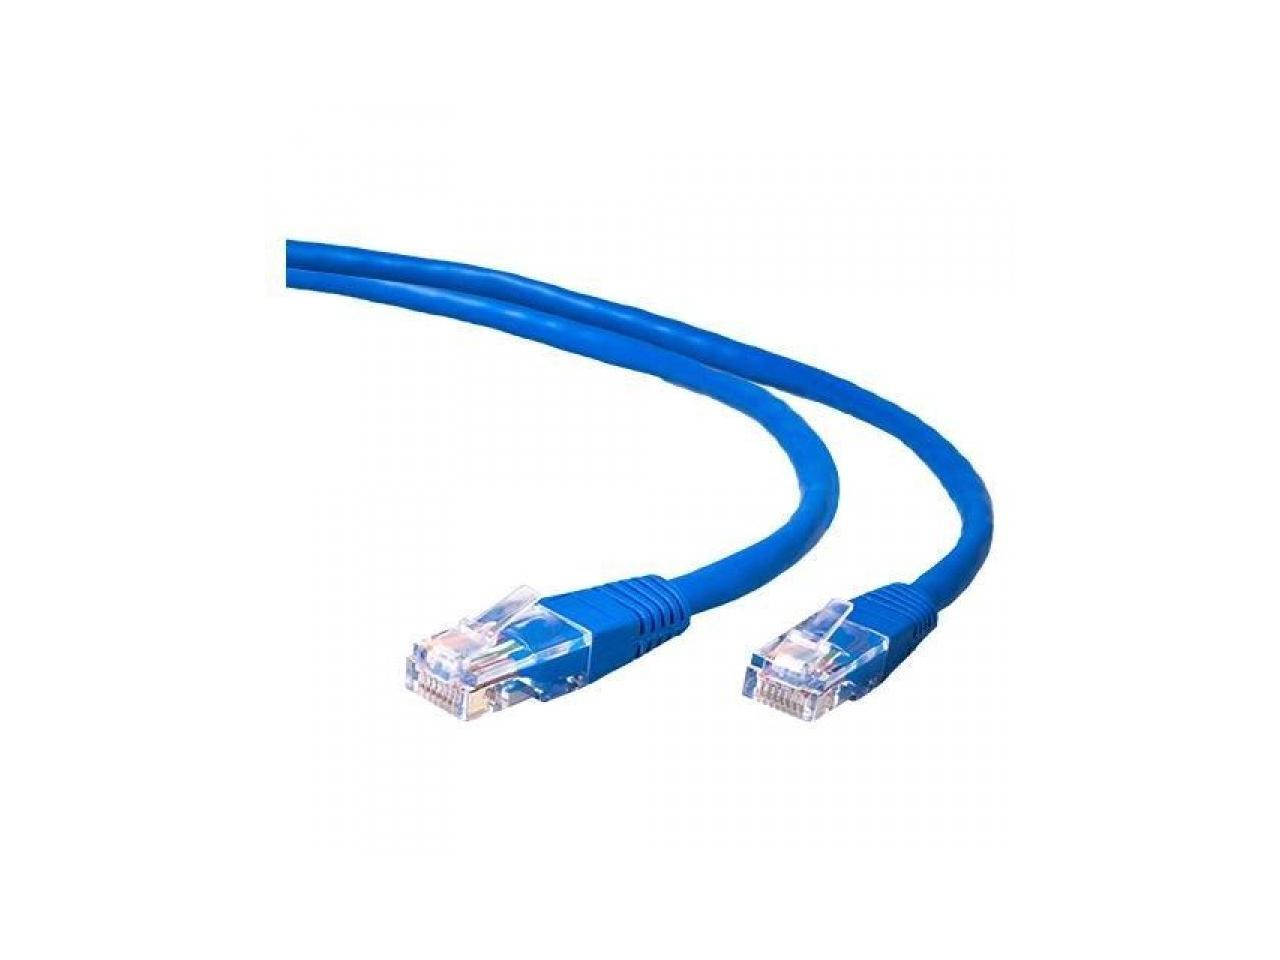 NEON Network Cable CAT6 RJ45 UTP 30ft Blue. Model Cat6-10m-BL